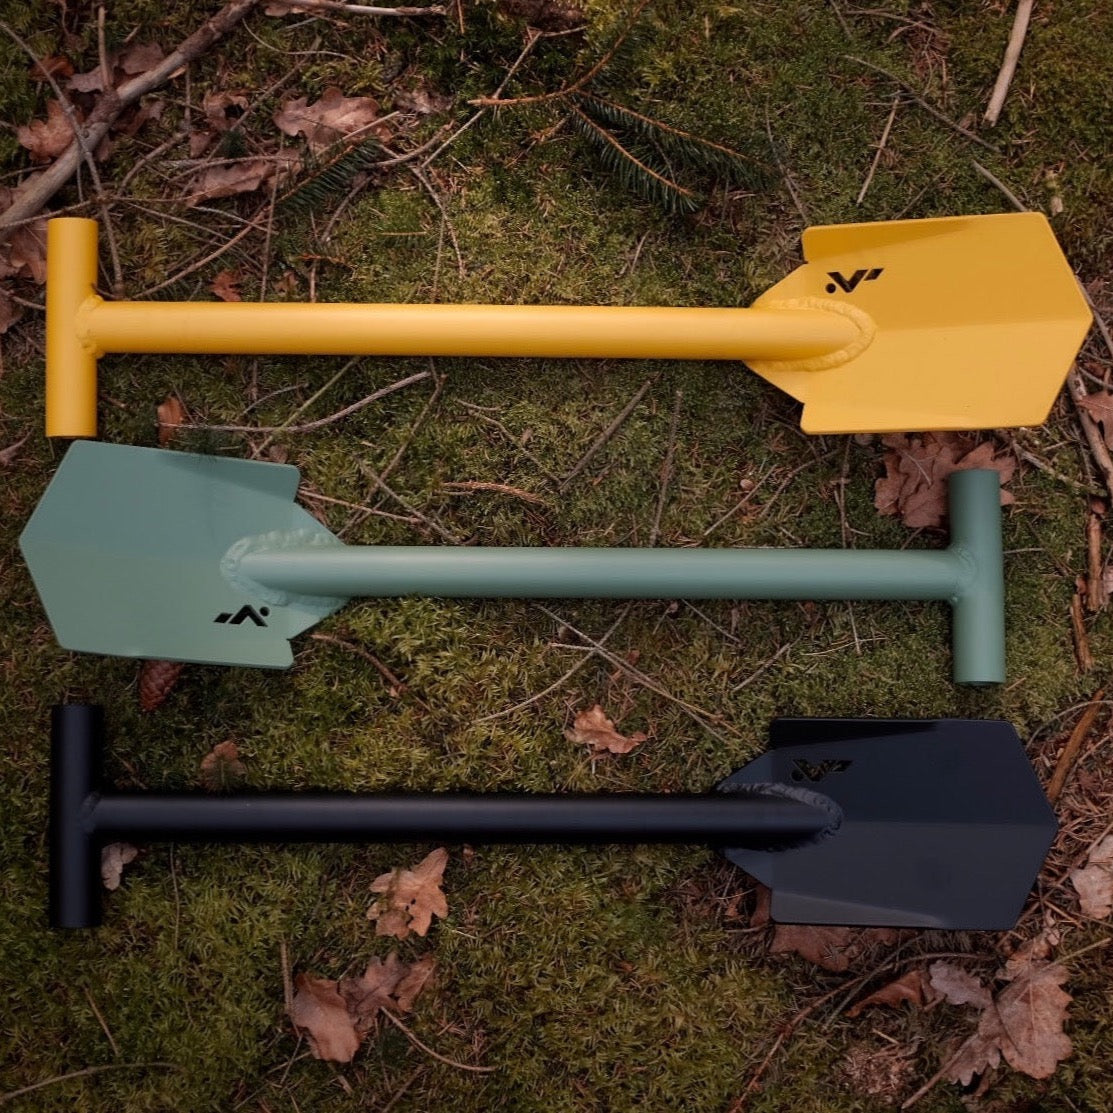 Yellow green and black DOT shovel laying on moss